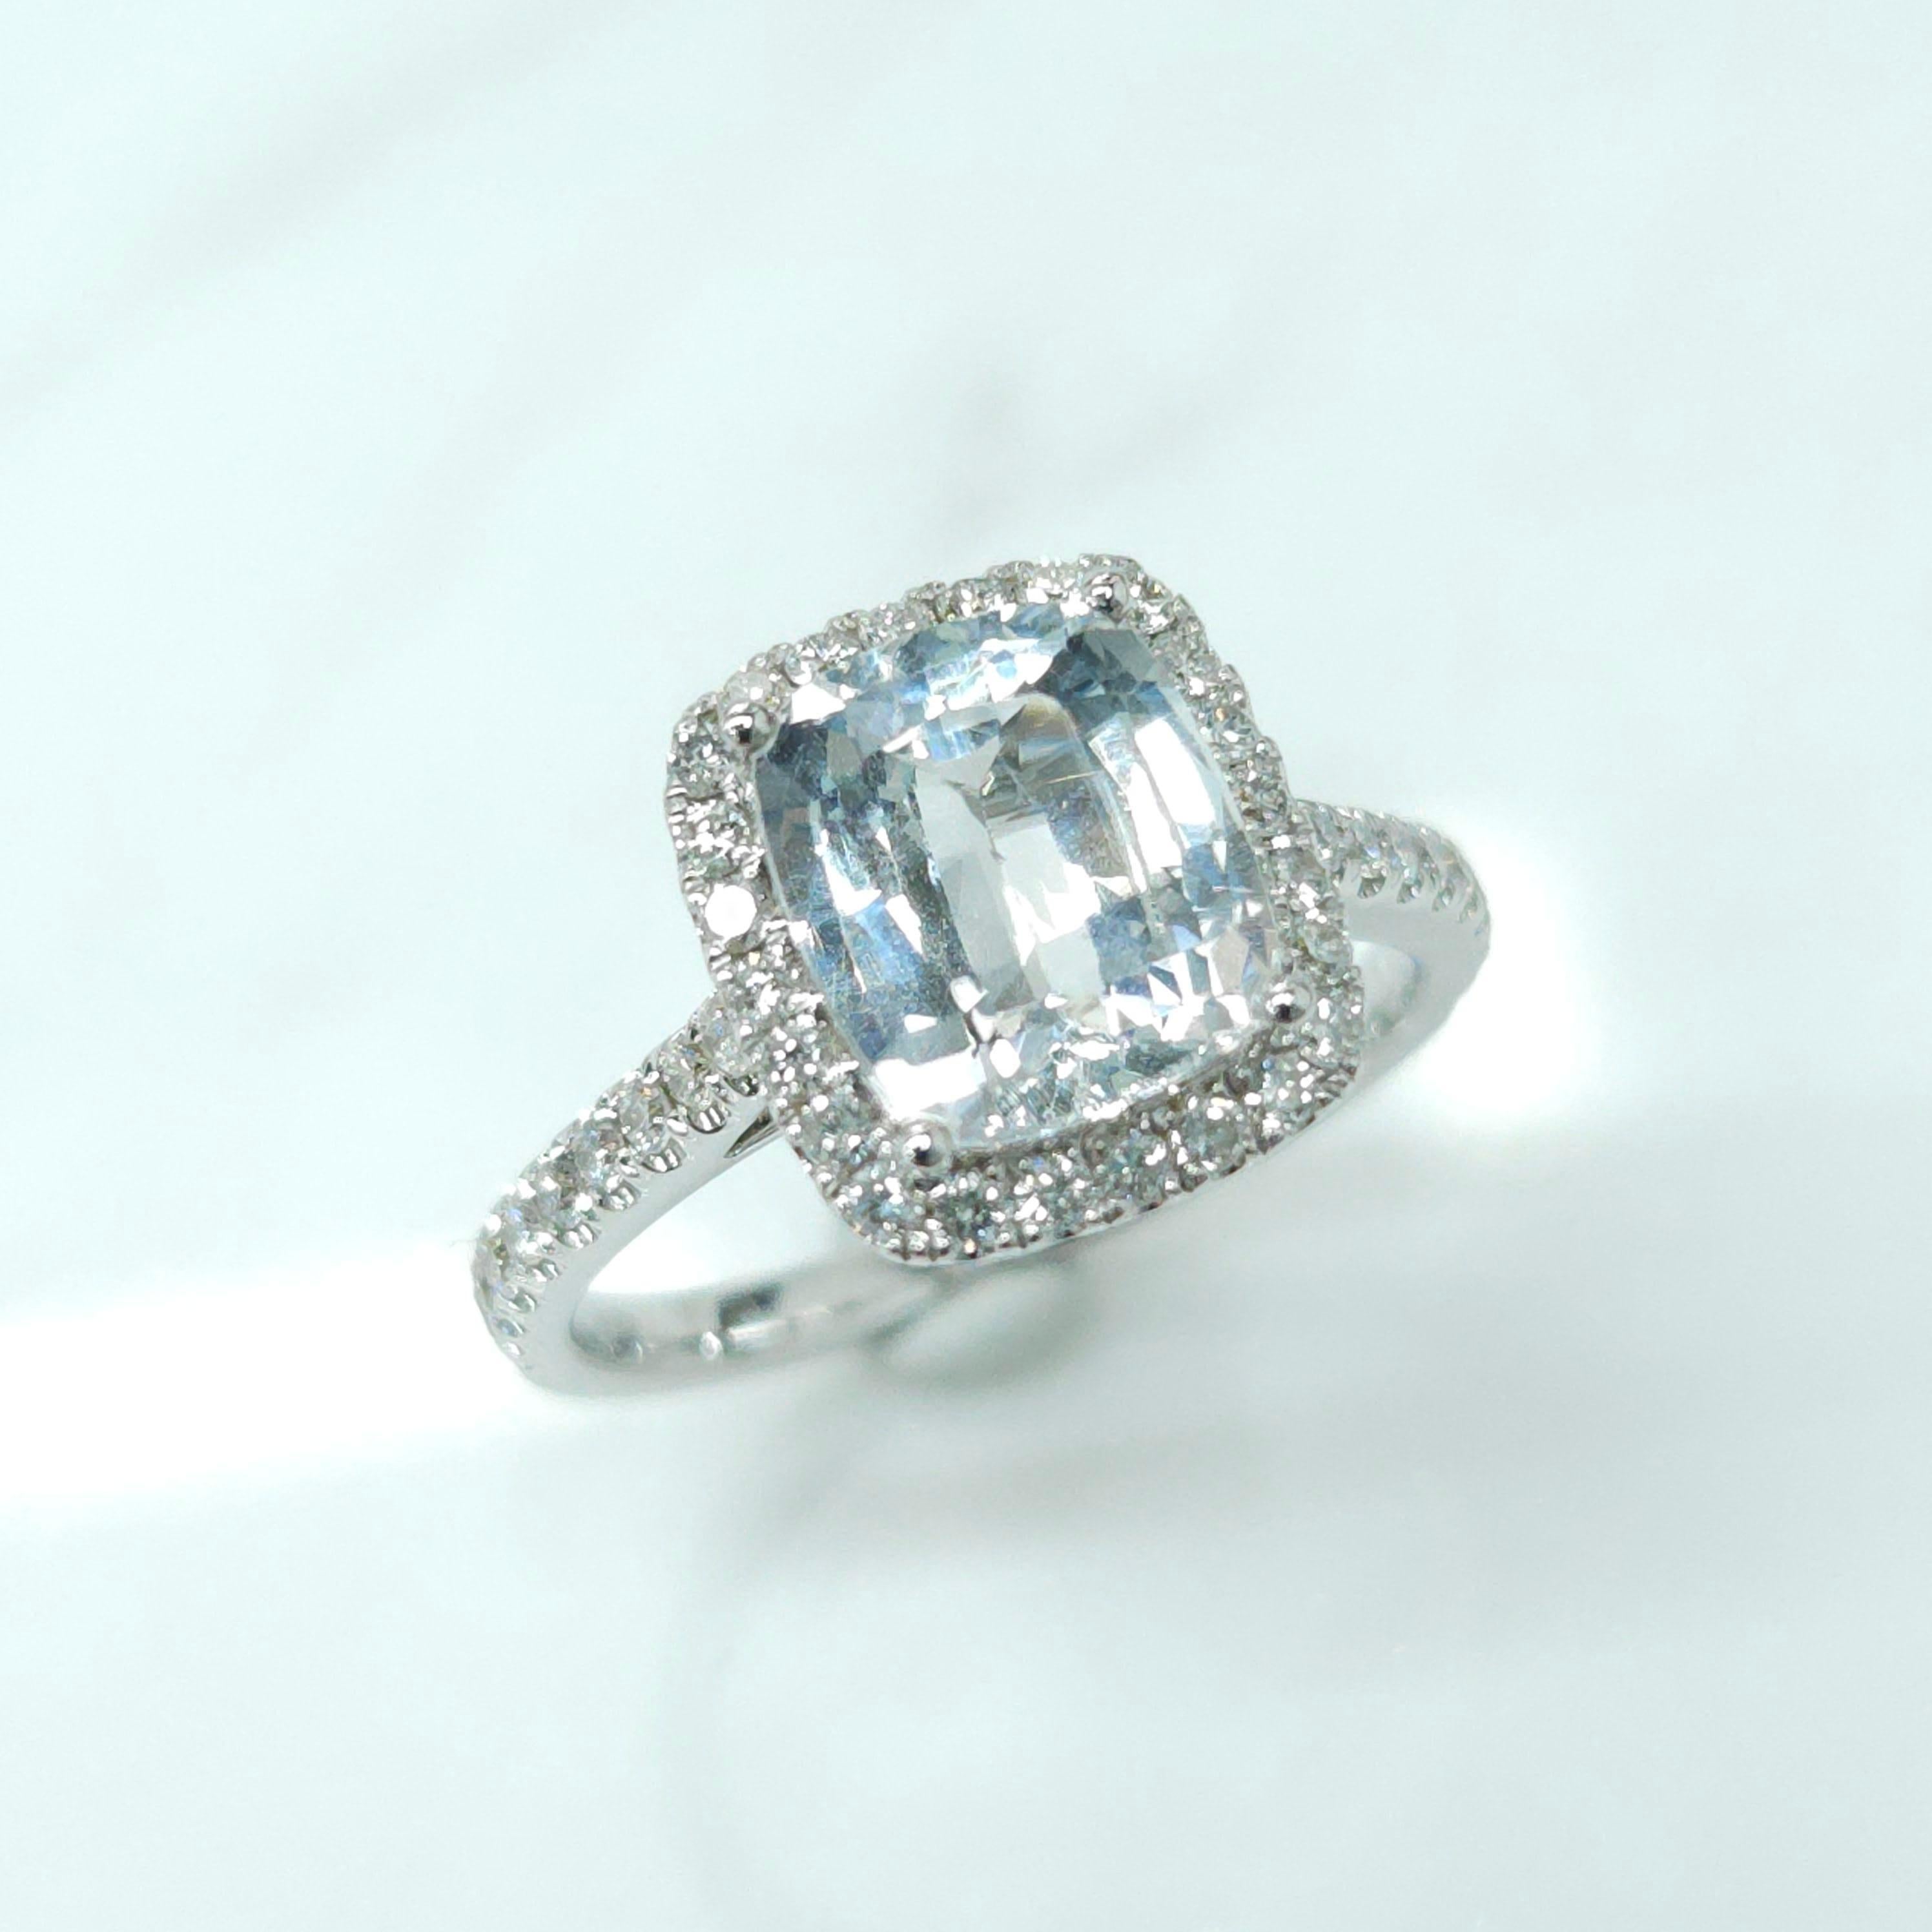 IGI Certified 2.35 Carat Unheated Sapphire & Diamond Ring in 18K WhiteGold For Sale 5